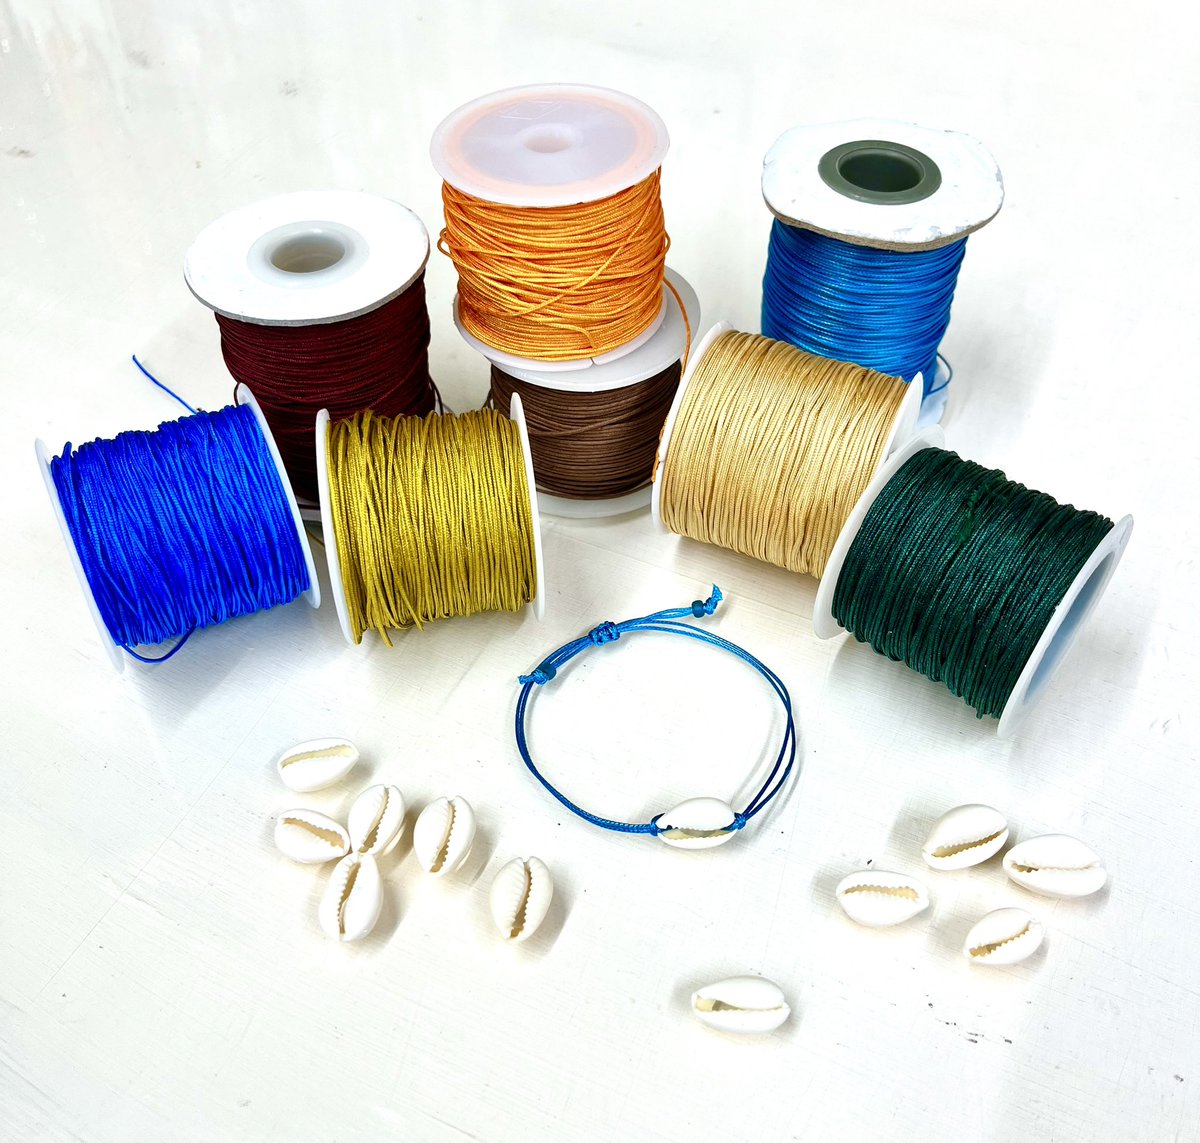 Just need to pick a colour 🌈 #shellbracelet #jewellerymaking #bohostyle #cordbracelet #beads #beadshop